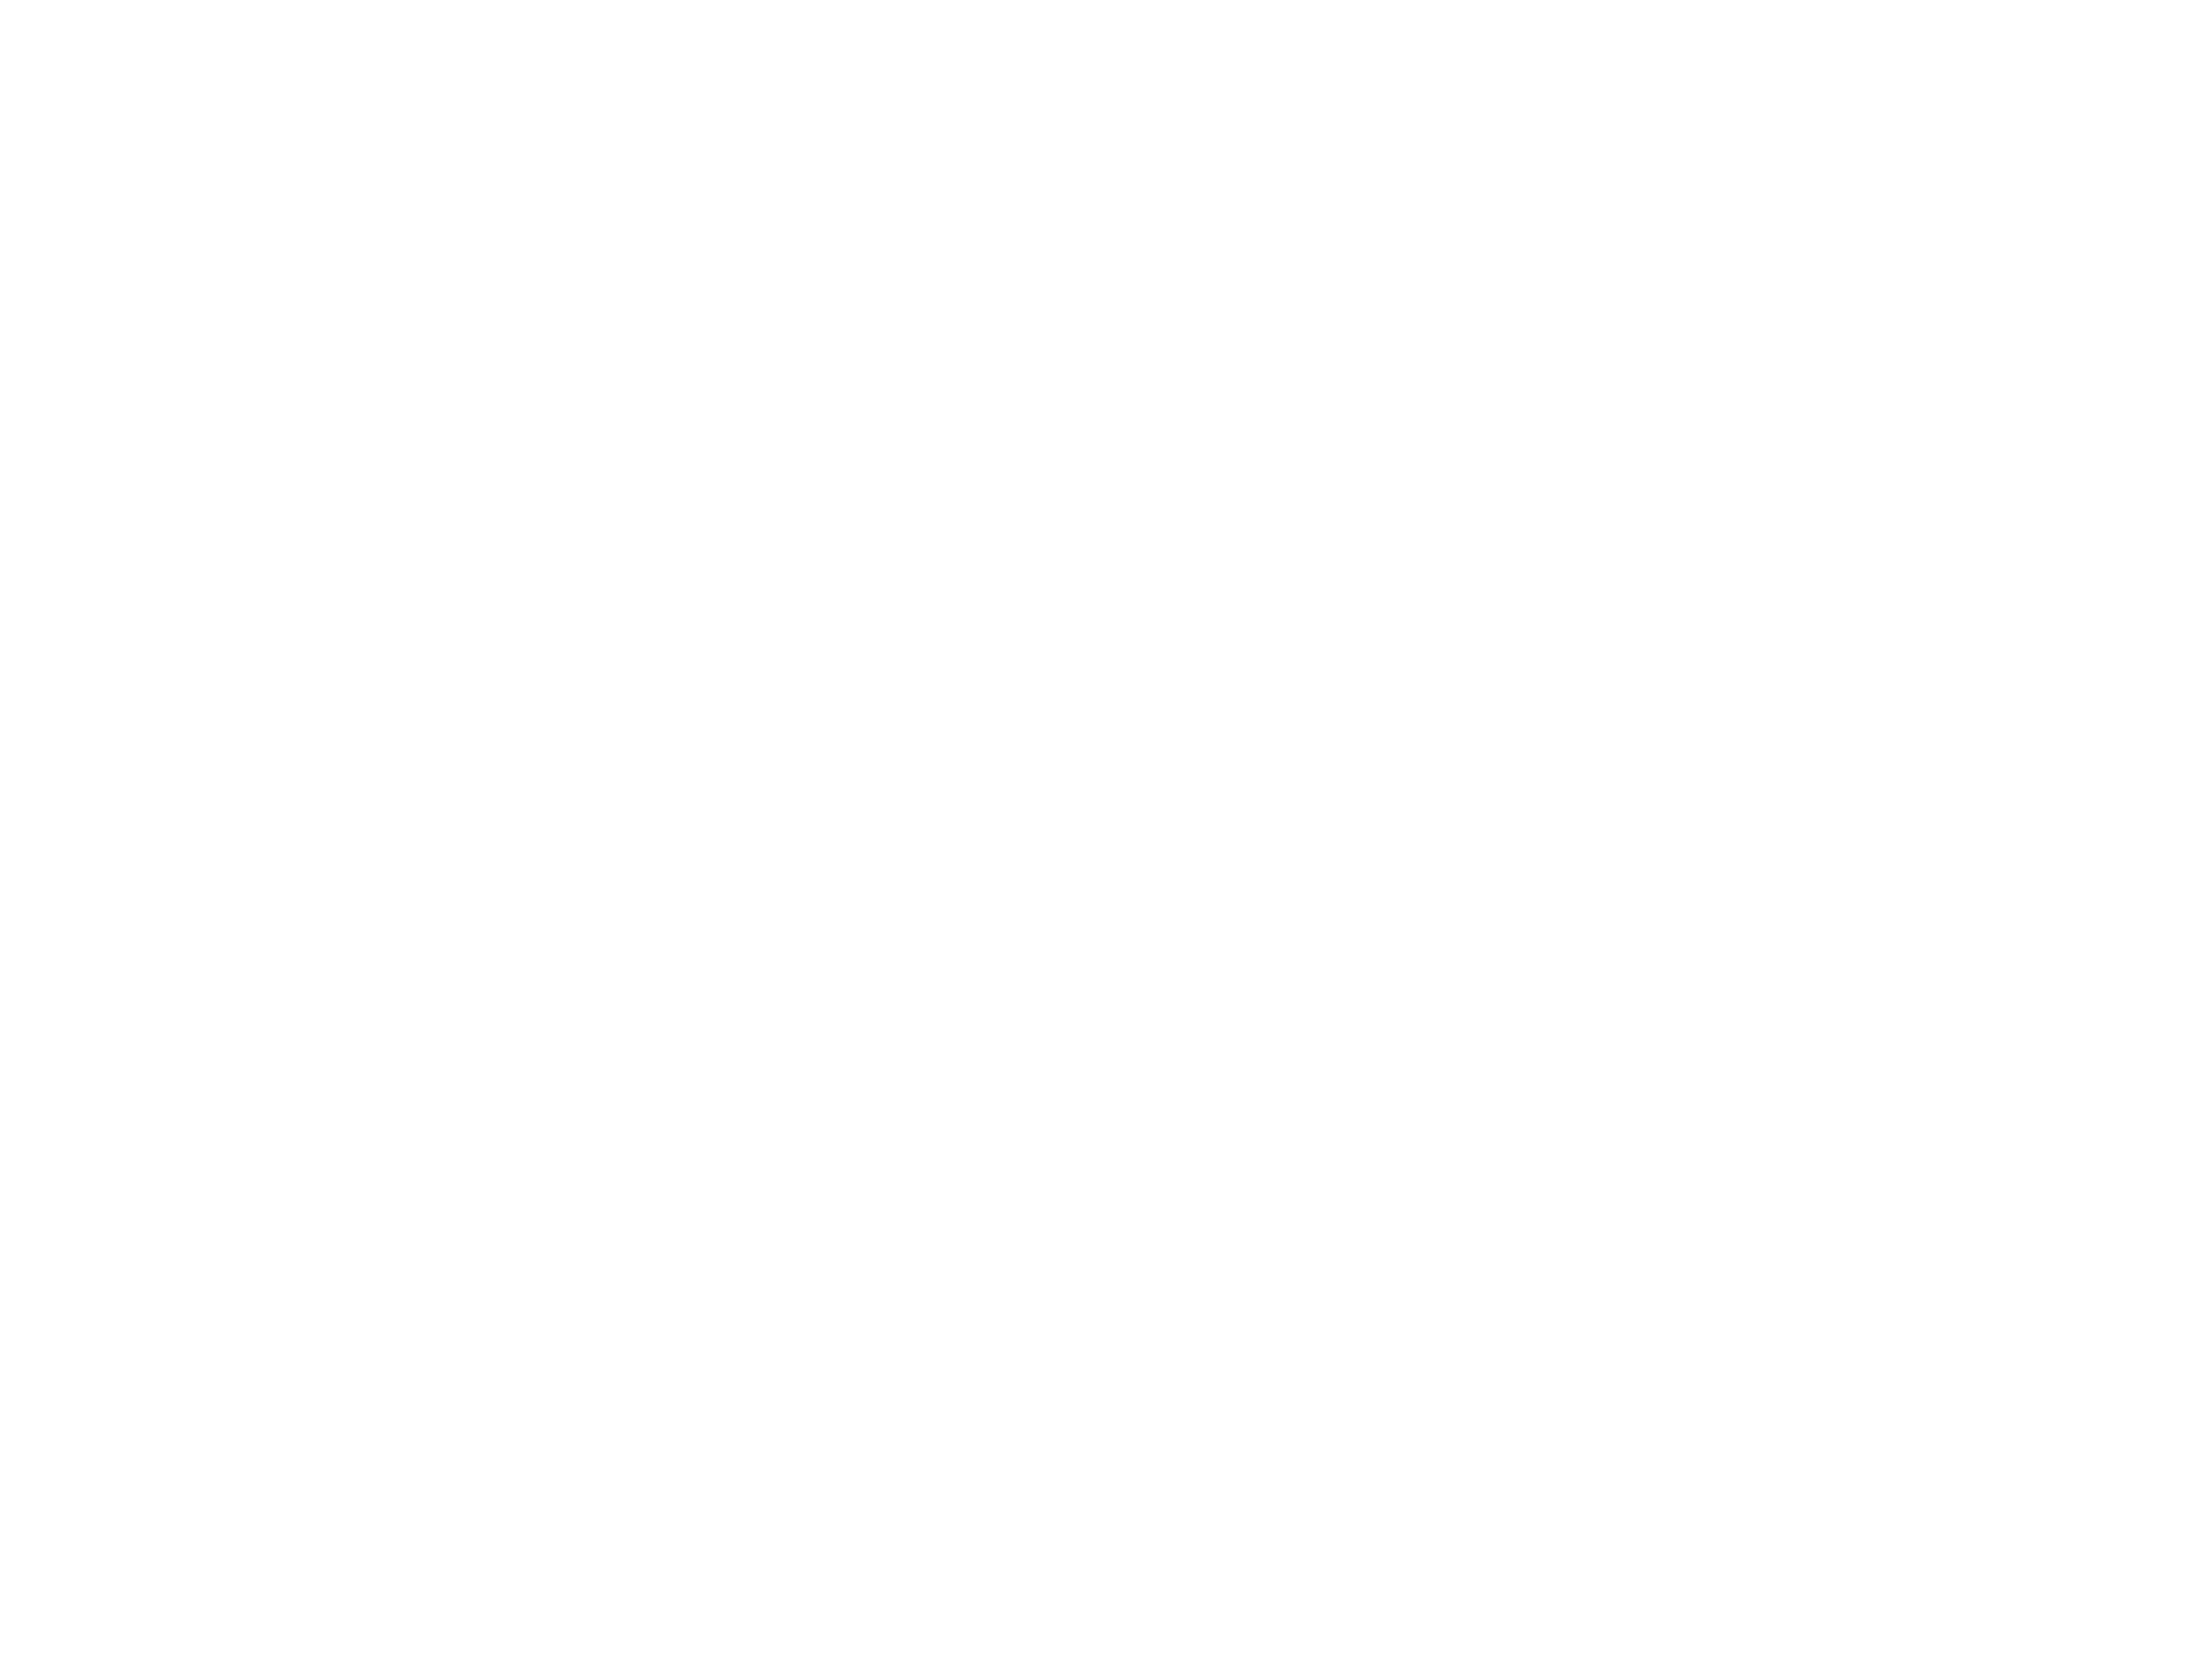 Restaurant Jack'O